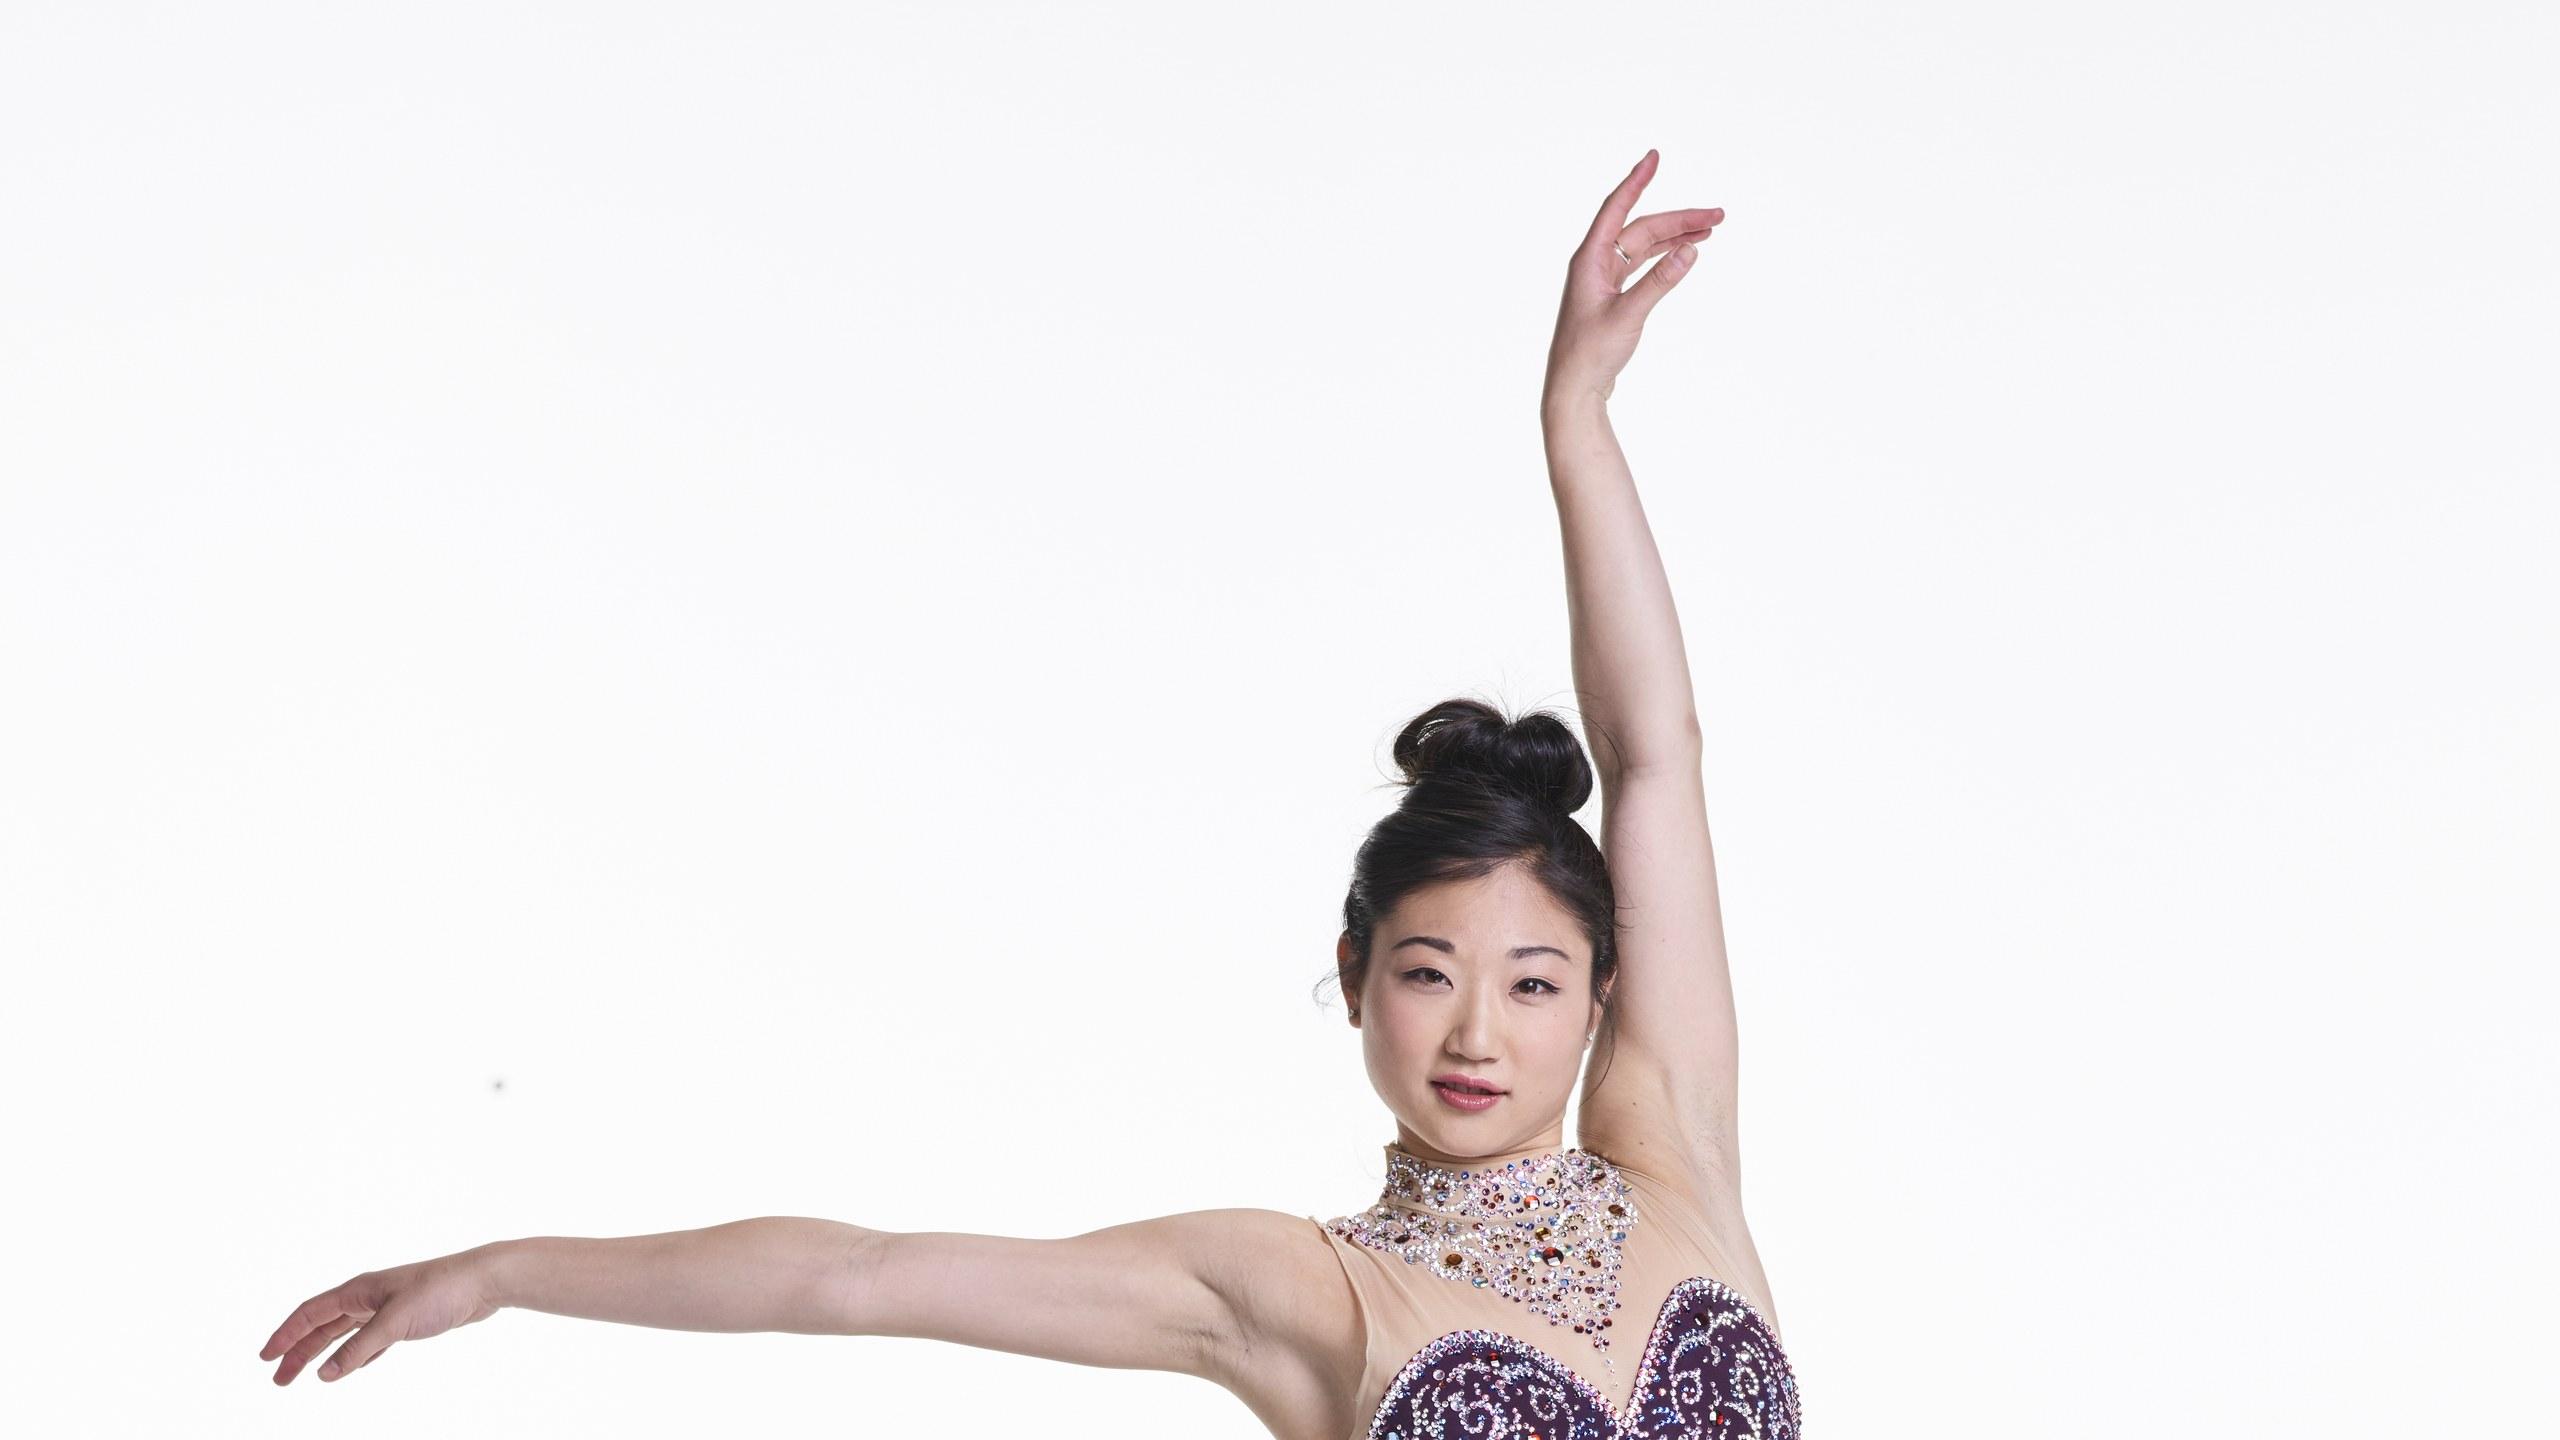 Winter Olympics 2018: Mirai Nagasu Q&A